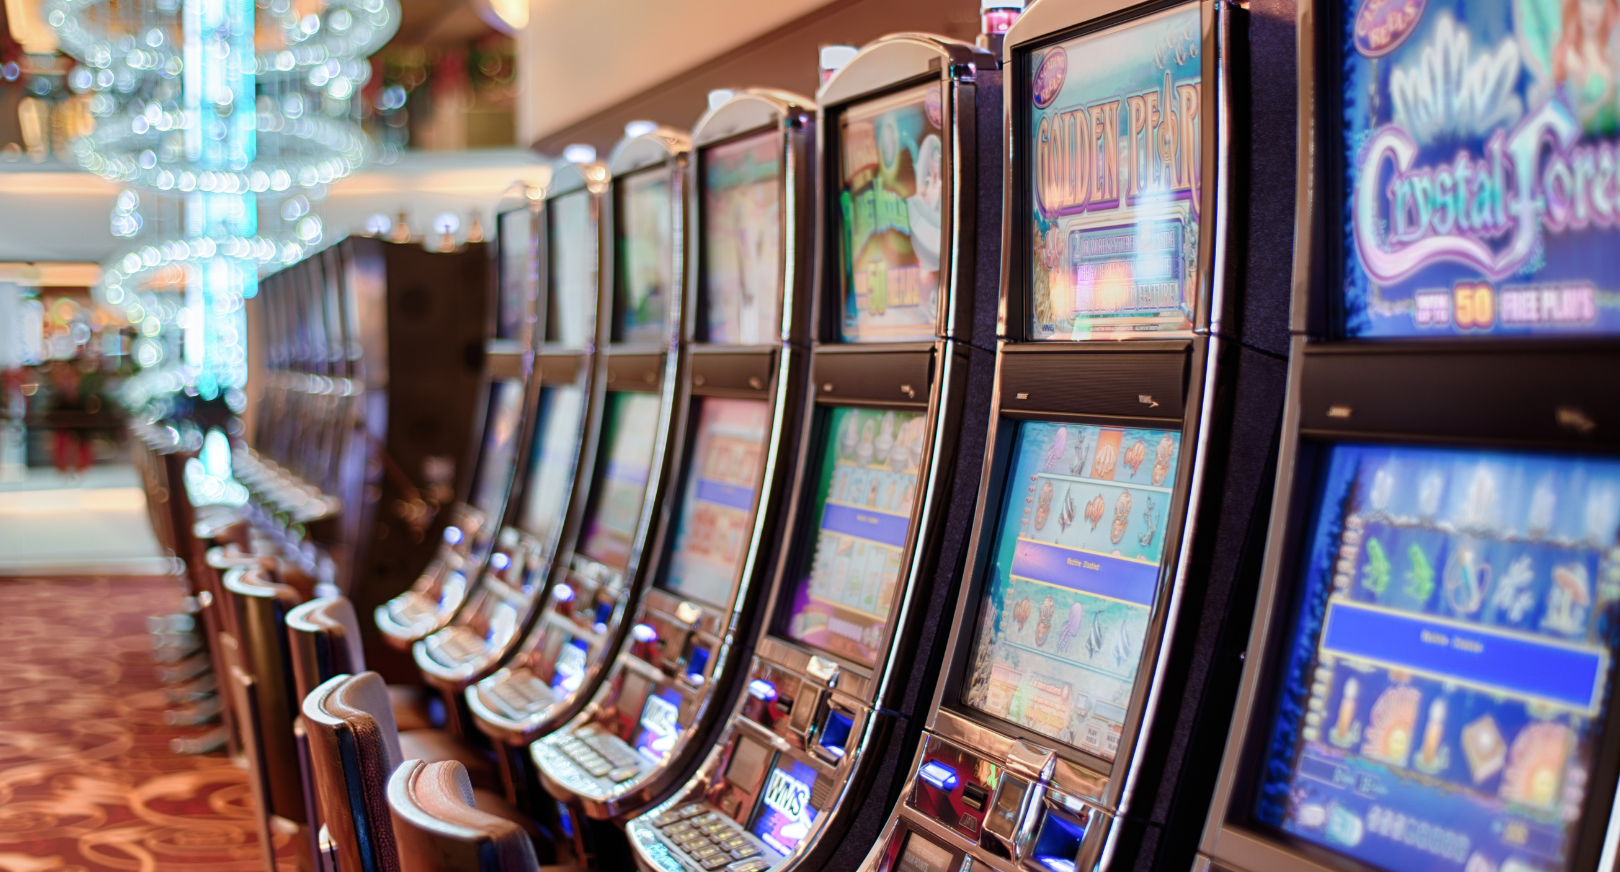 How To Manipulate A Slot Machine